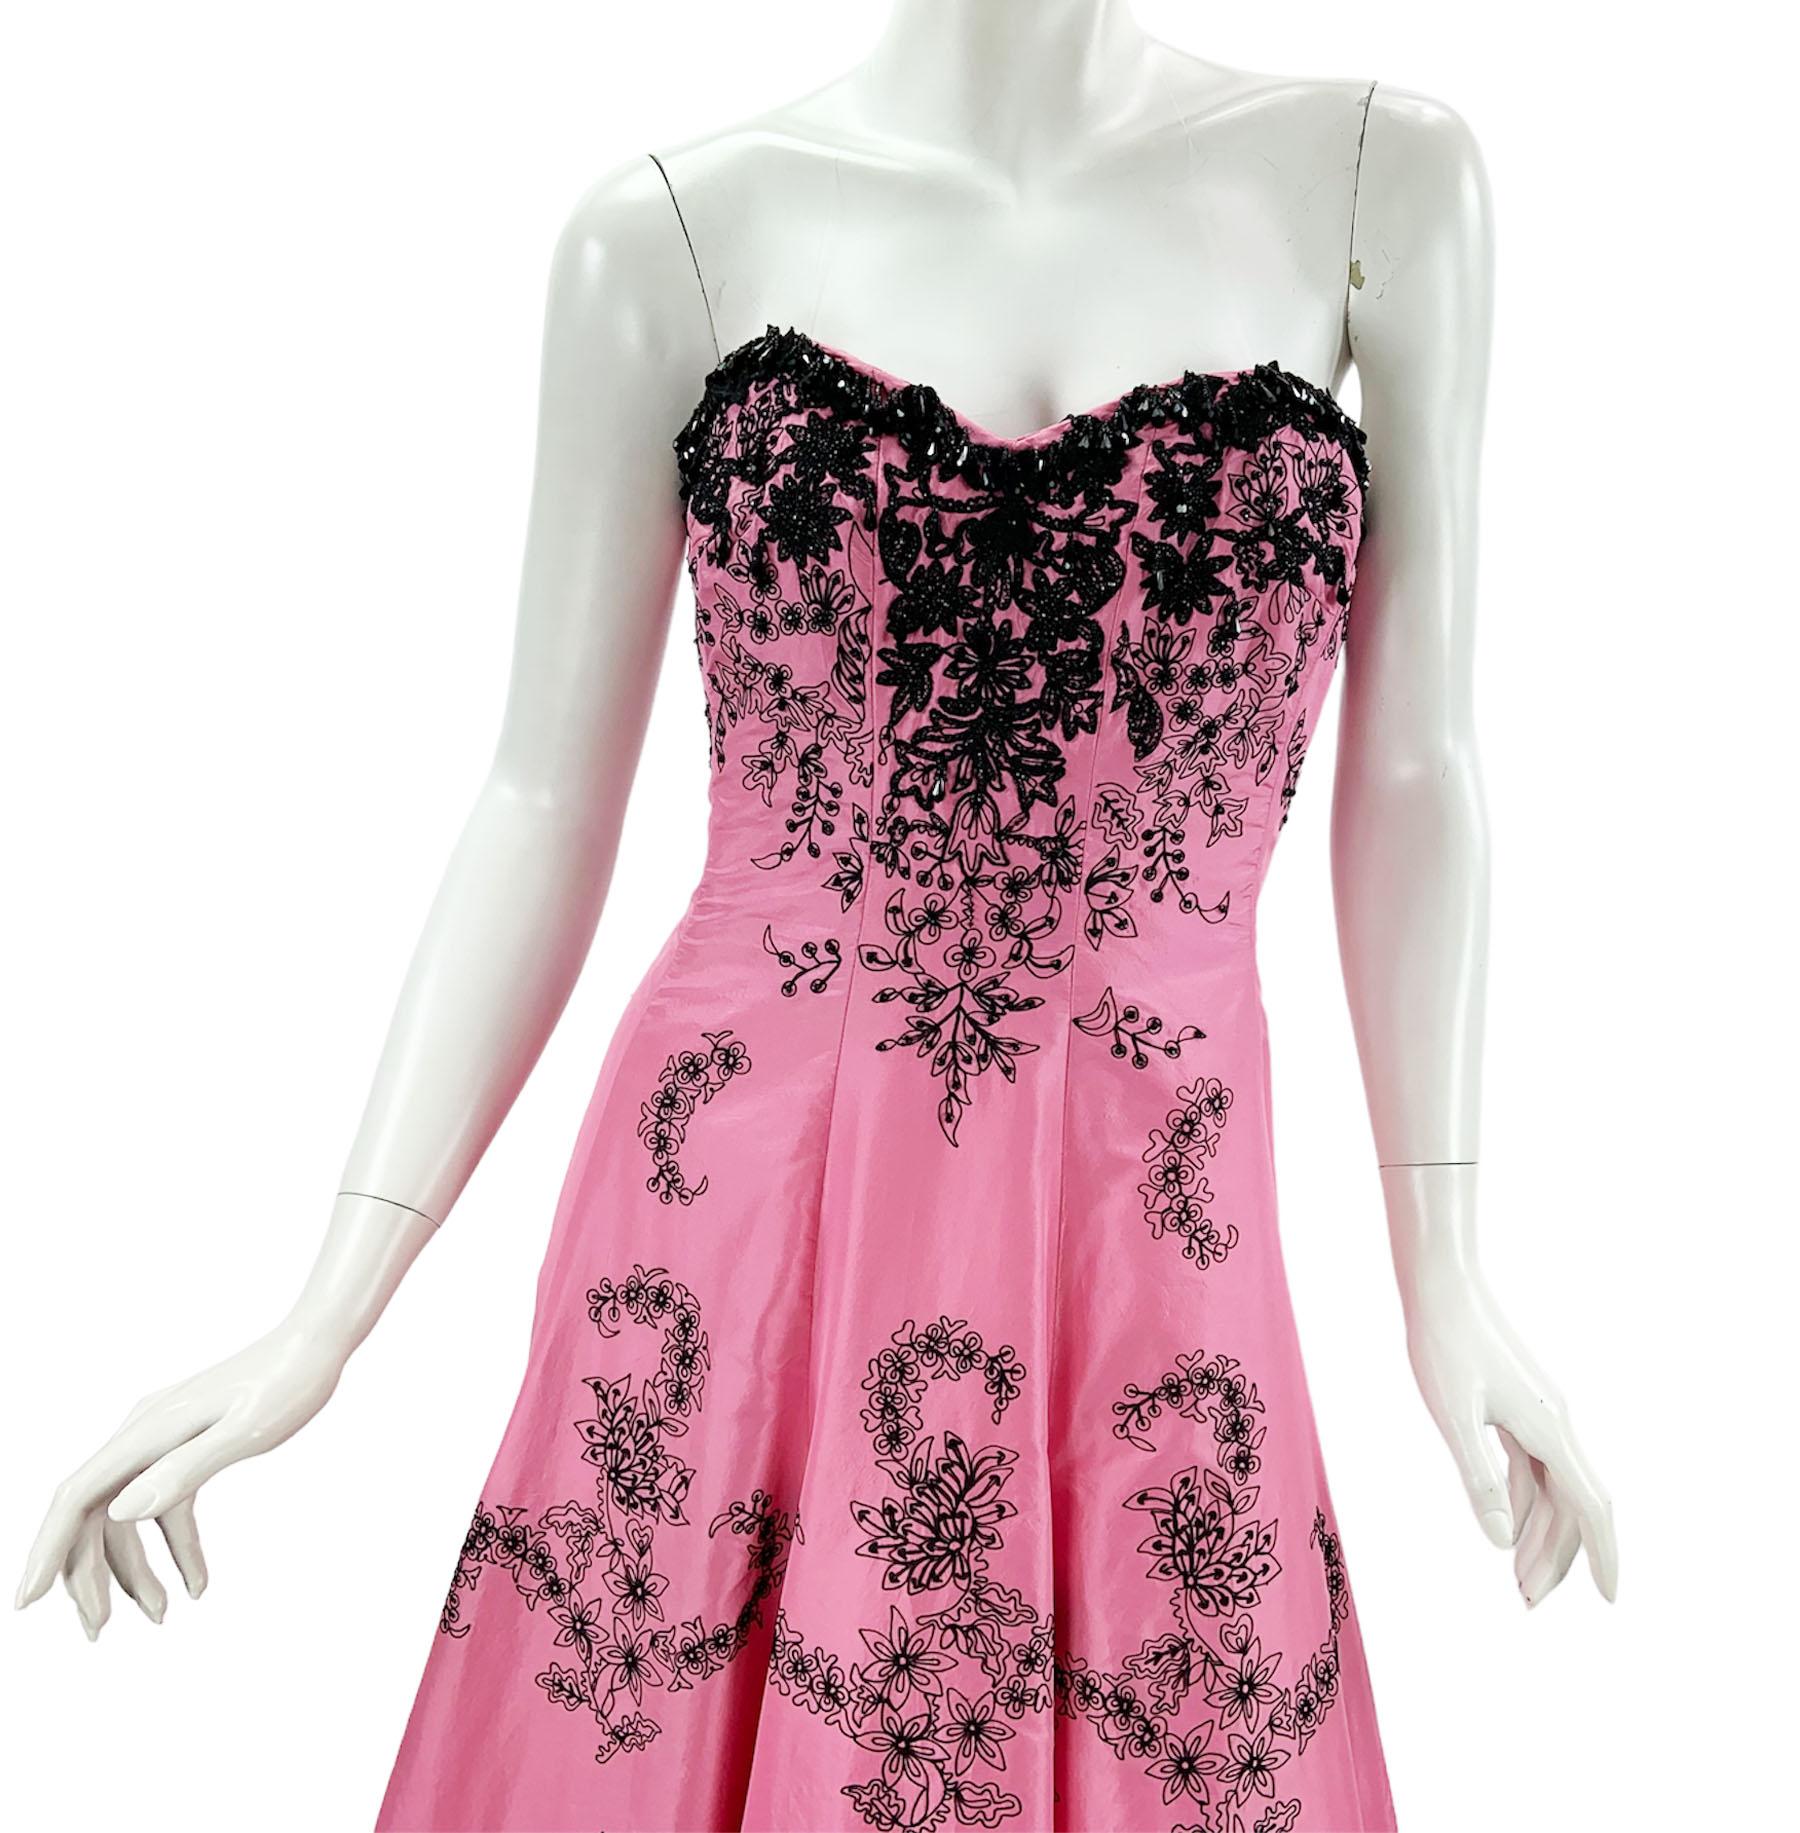 Oscar de la Renta S/S 2004 Collection Pink Silk Taffeta Embellished Dress Gown 8 For Sale 2